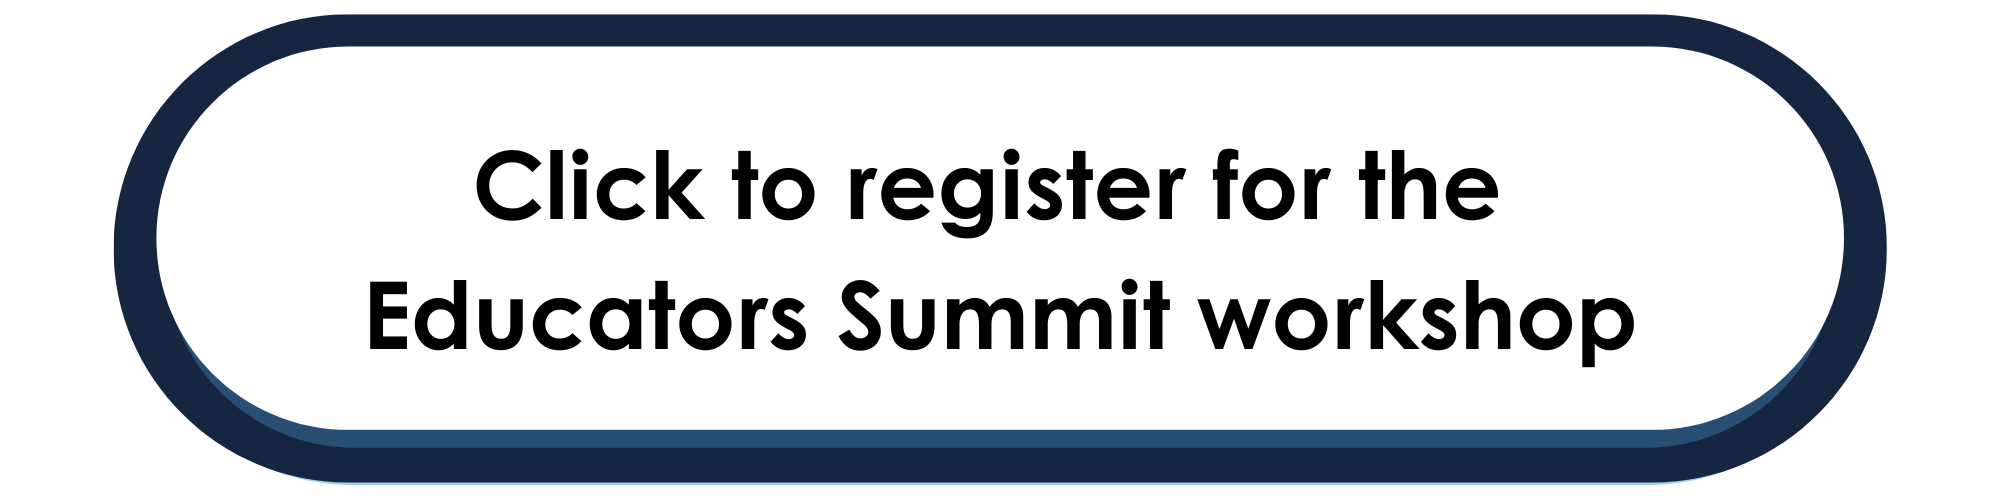 Educators Summit Workshop Registration Link